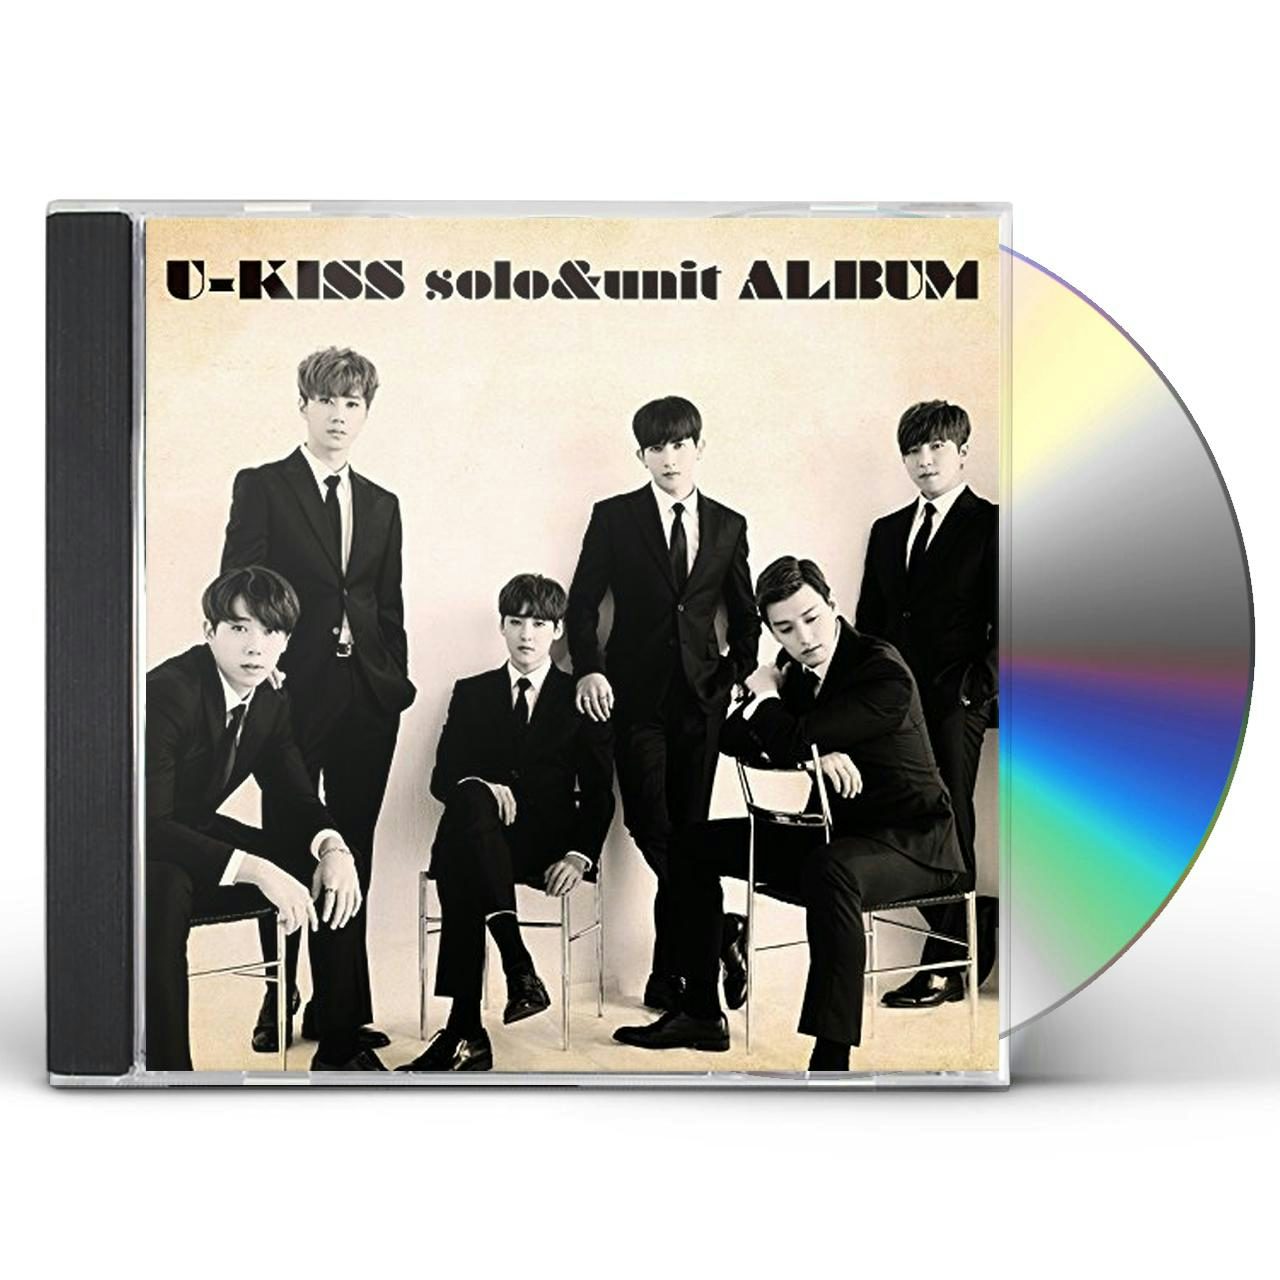 U-KISS GLORY CD